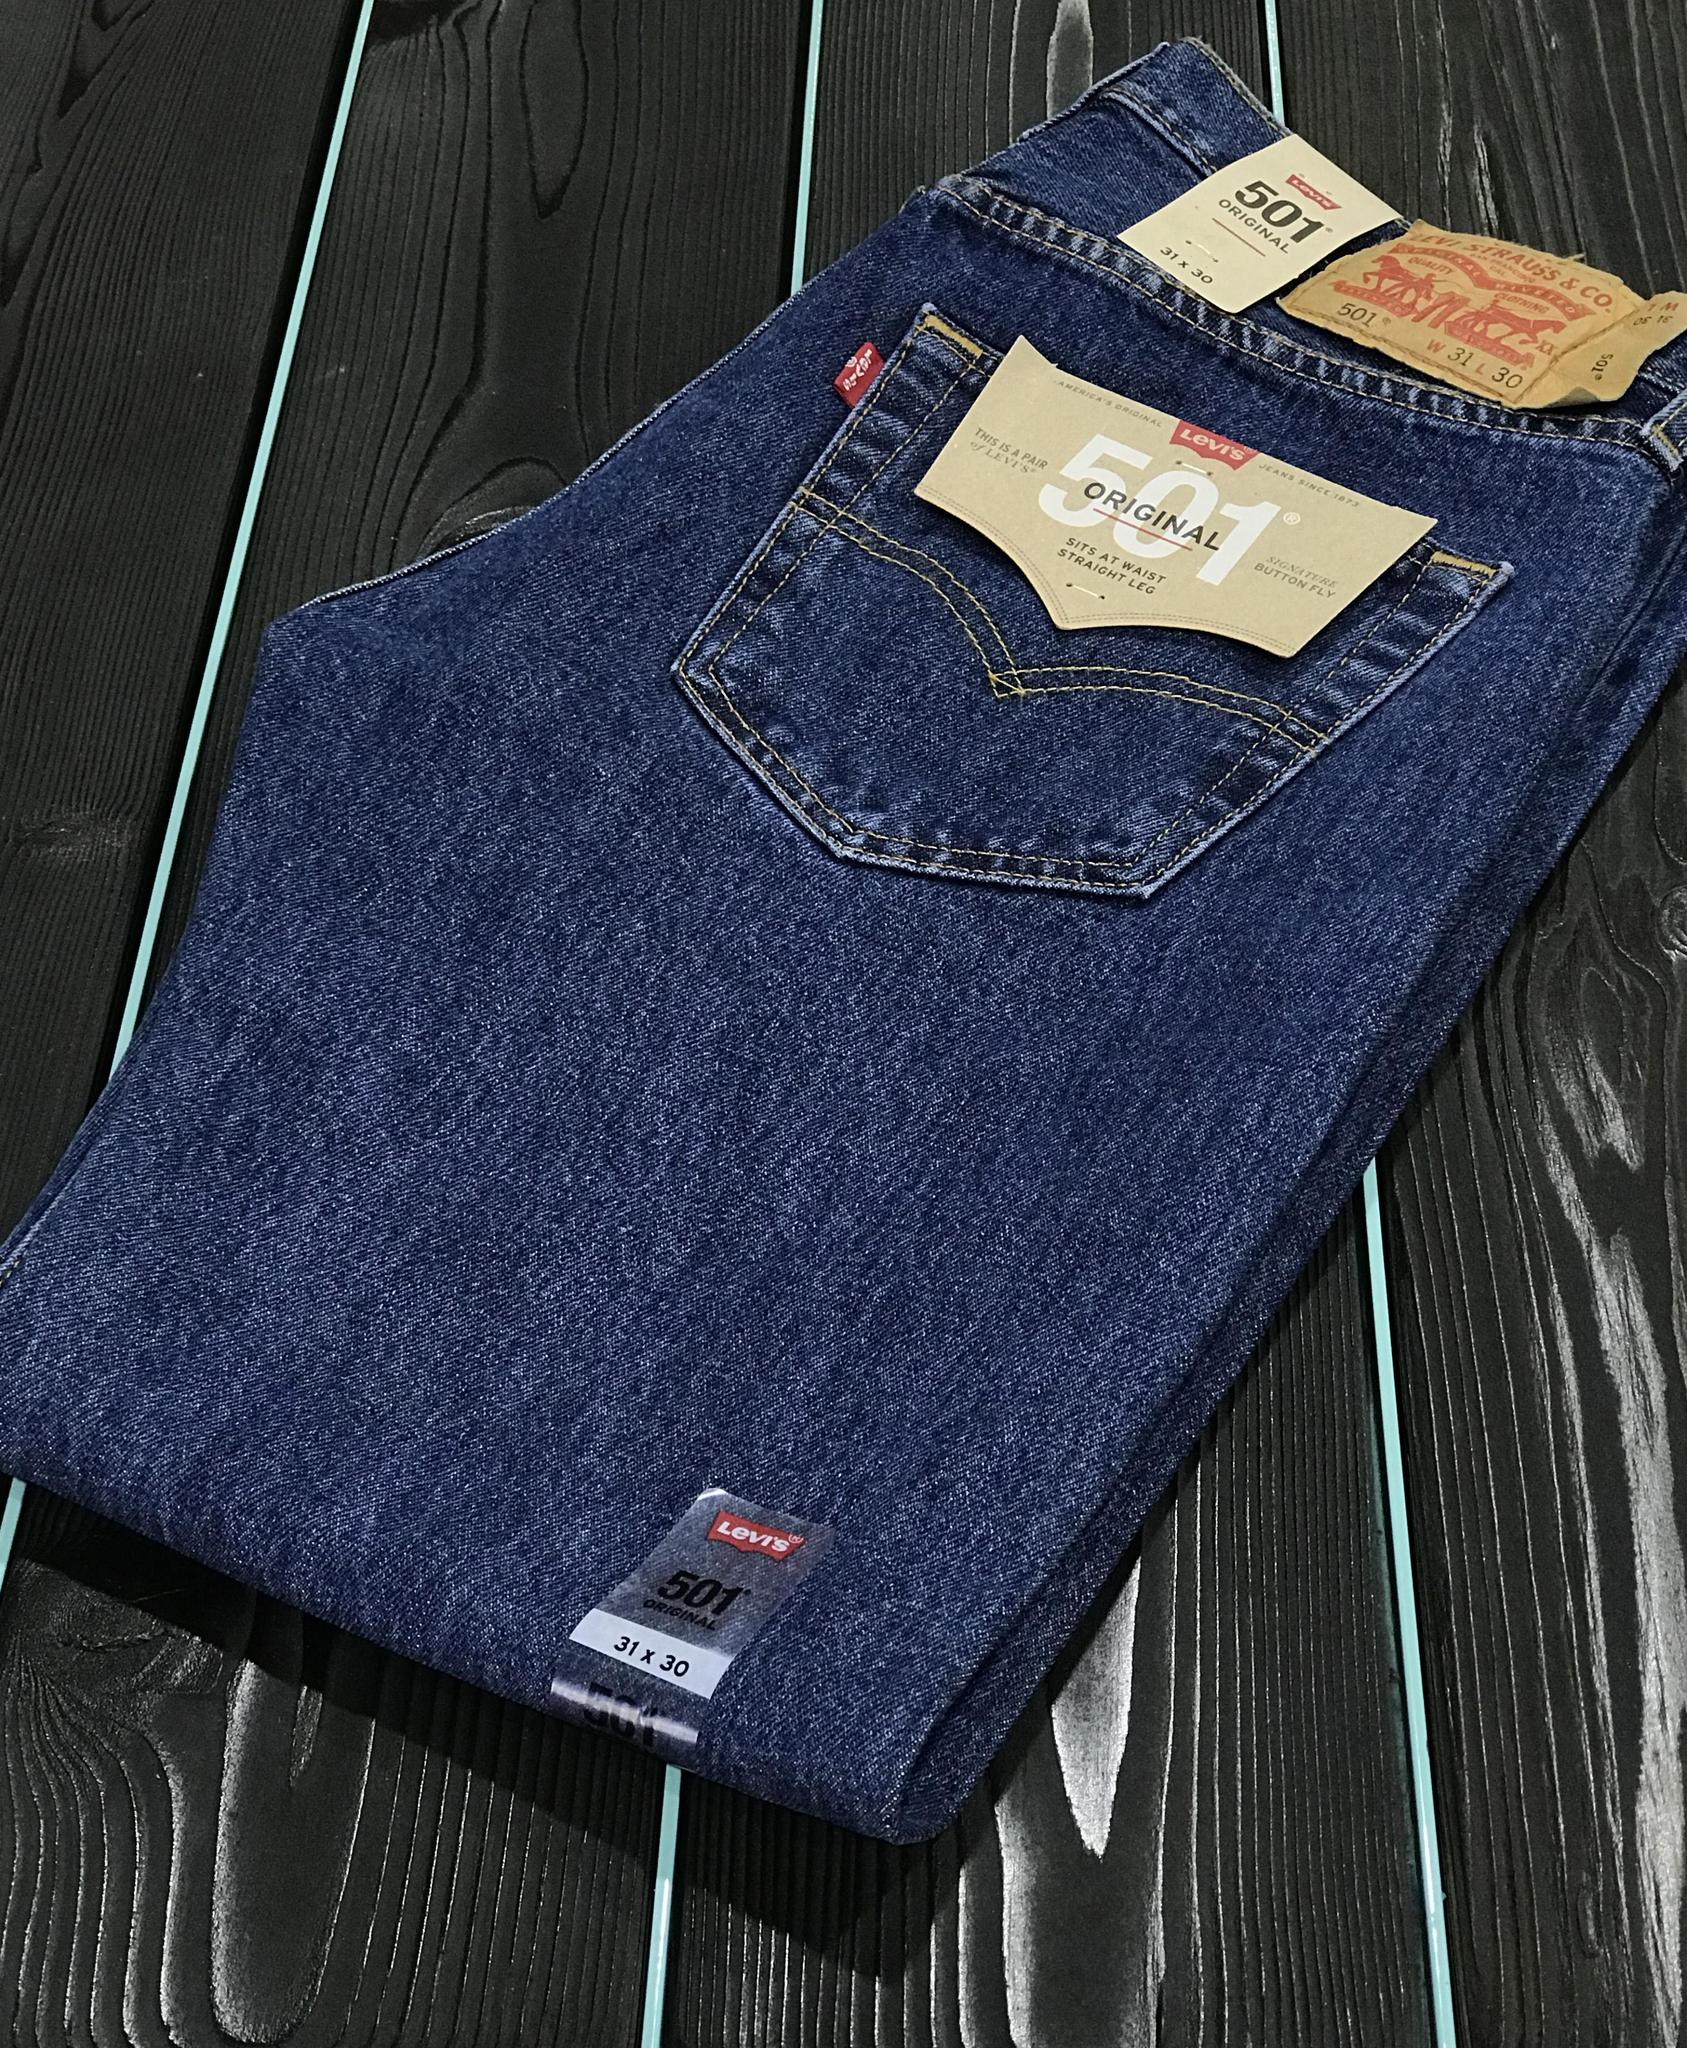 Levi's 501 Original Fit Jeans - Dark Stonewash – Rancho Army Navy